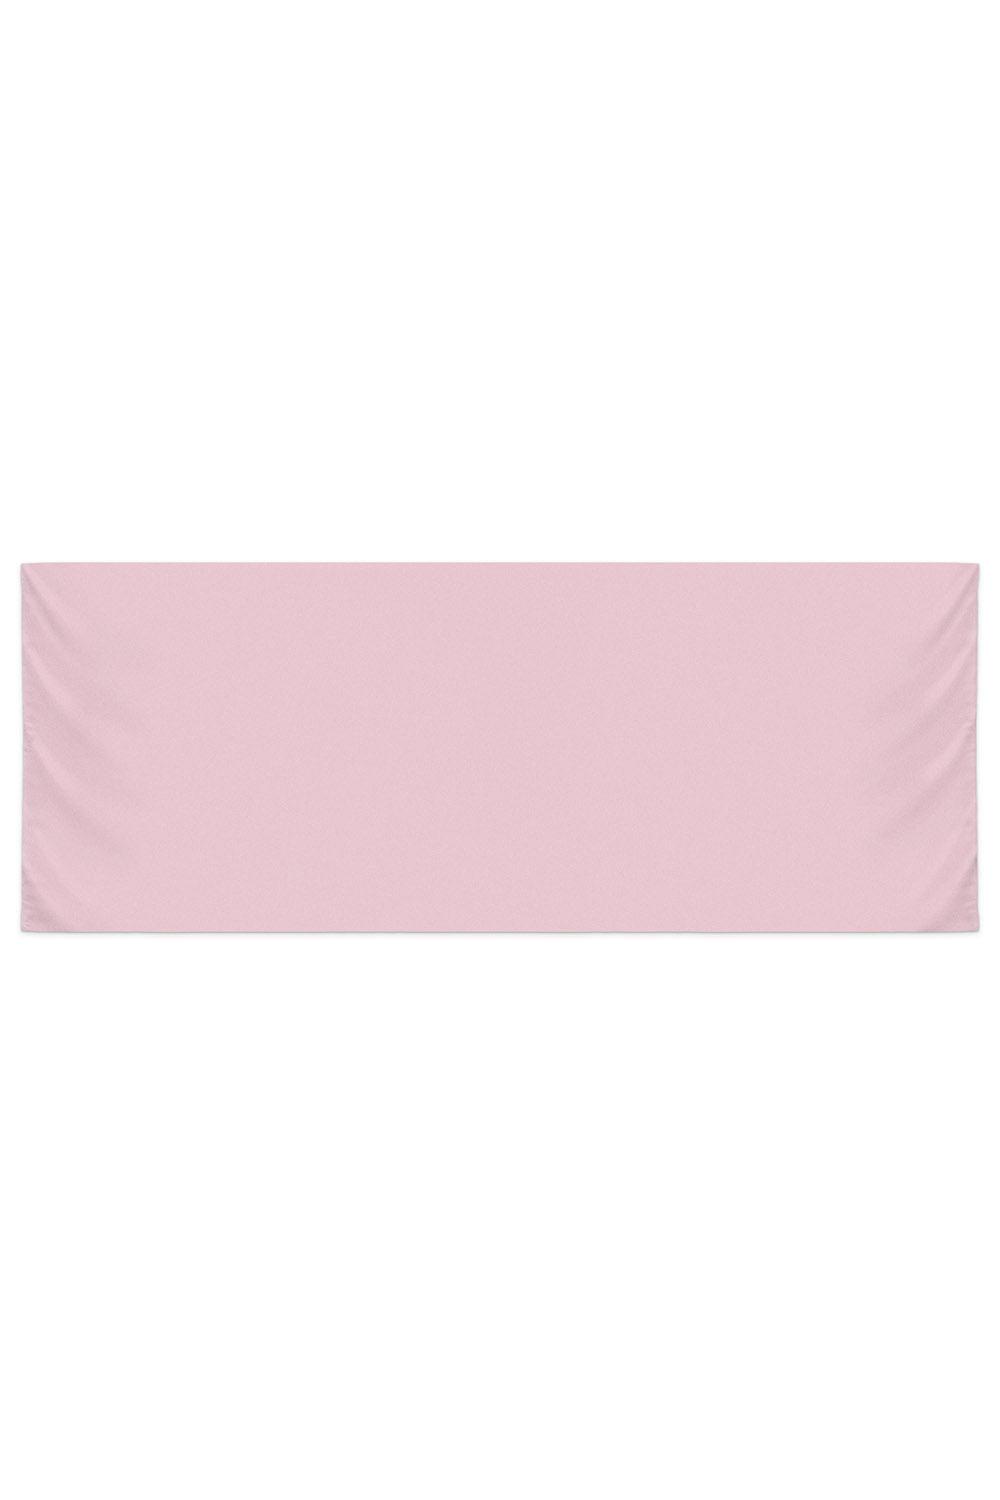 RR Basic Chiffon Shawl in Pink